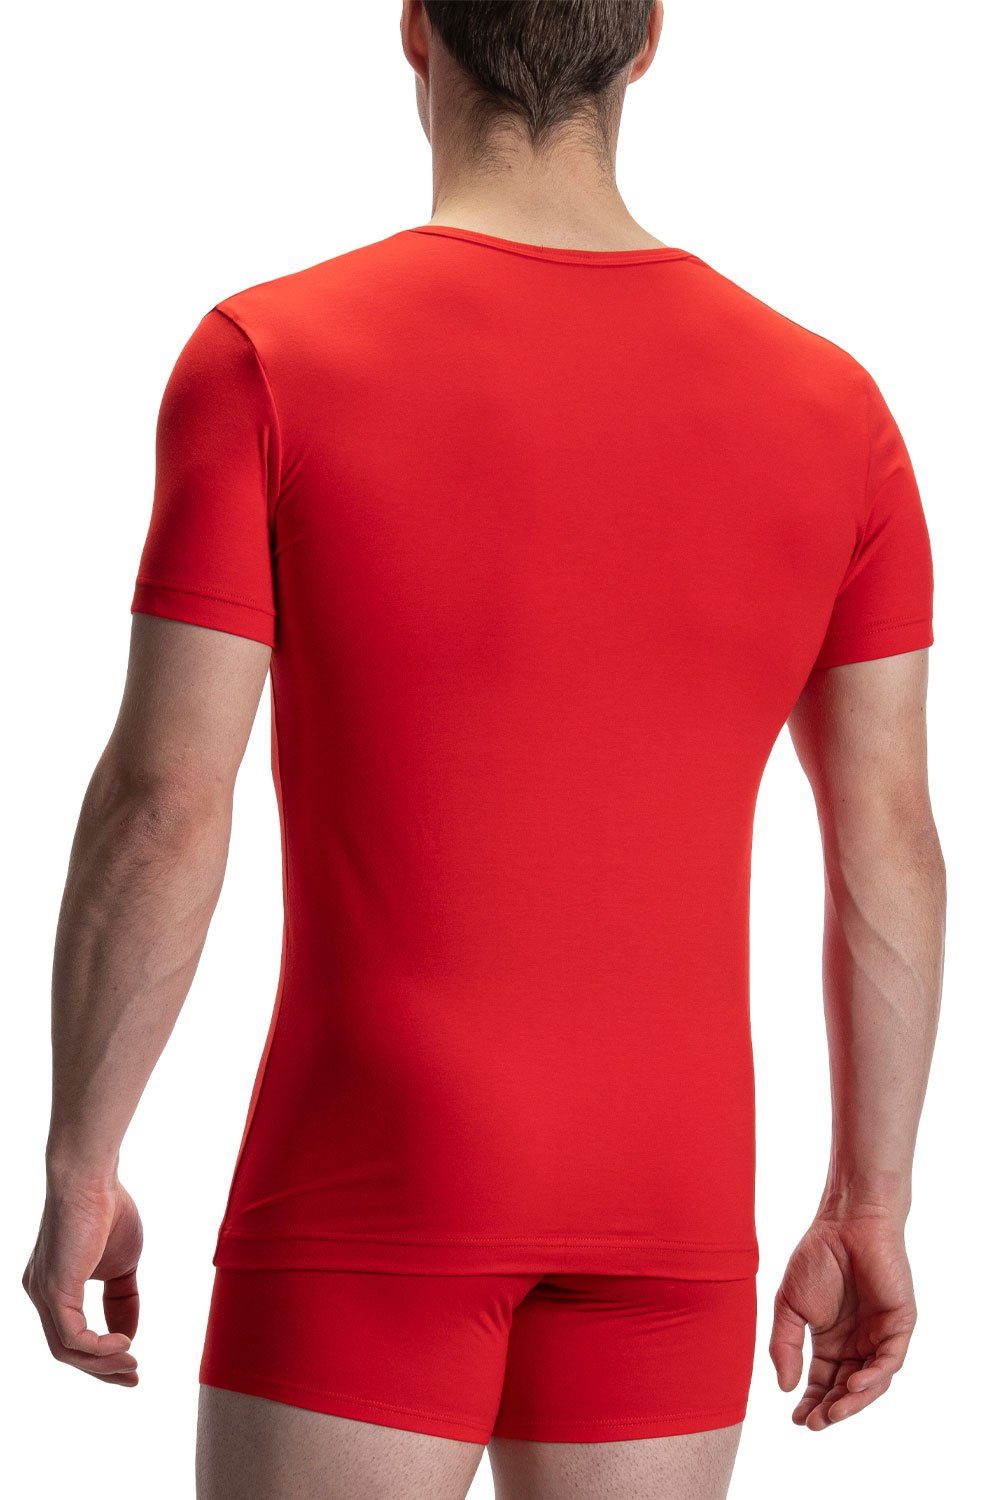 Olaf Benz Shirt red (Reg) 107418 T-Shirt V-Neck